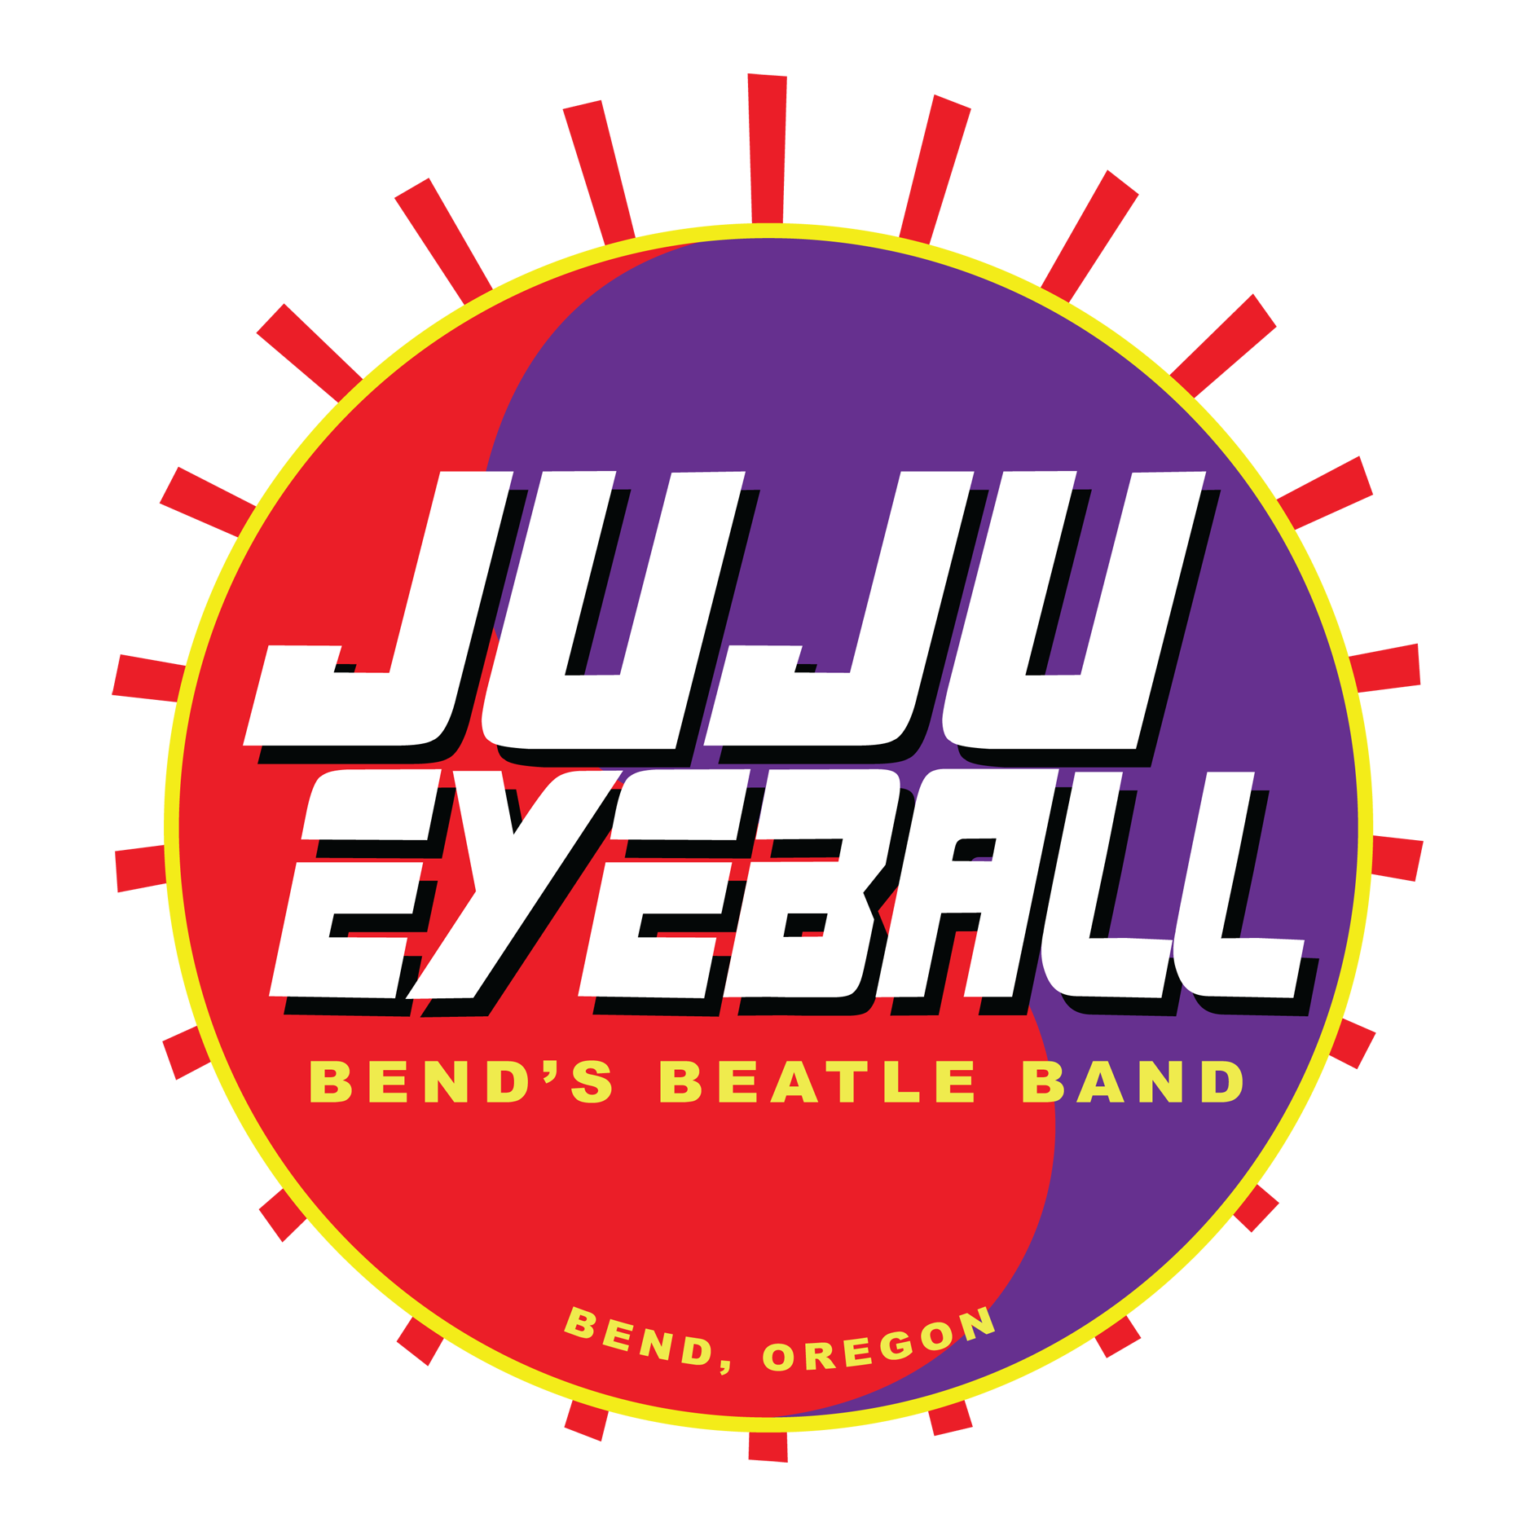 juju eyeballs